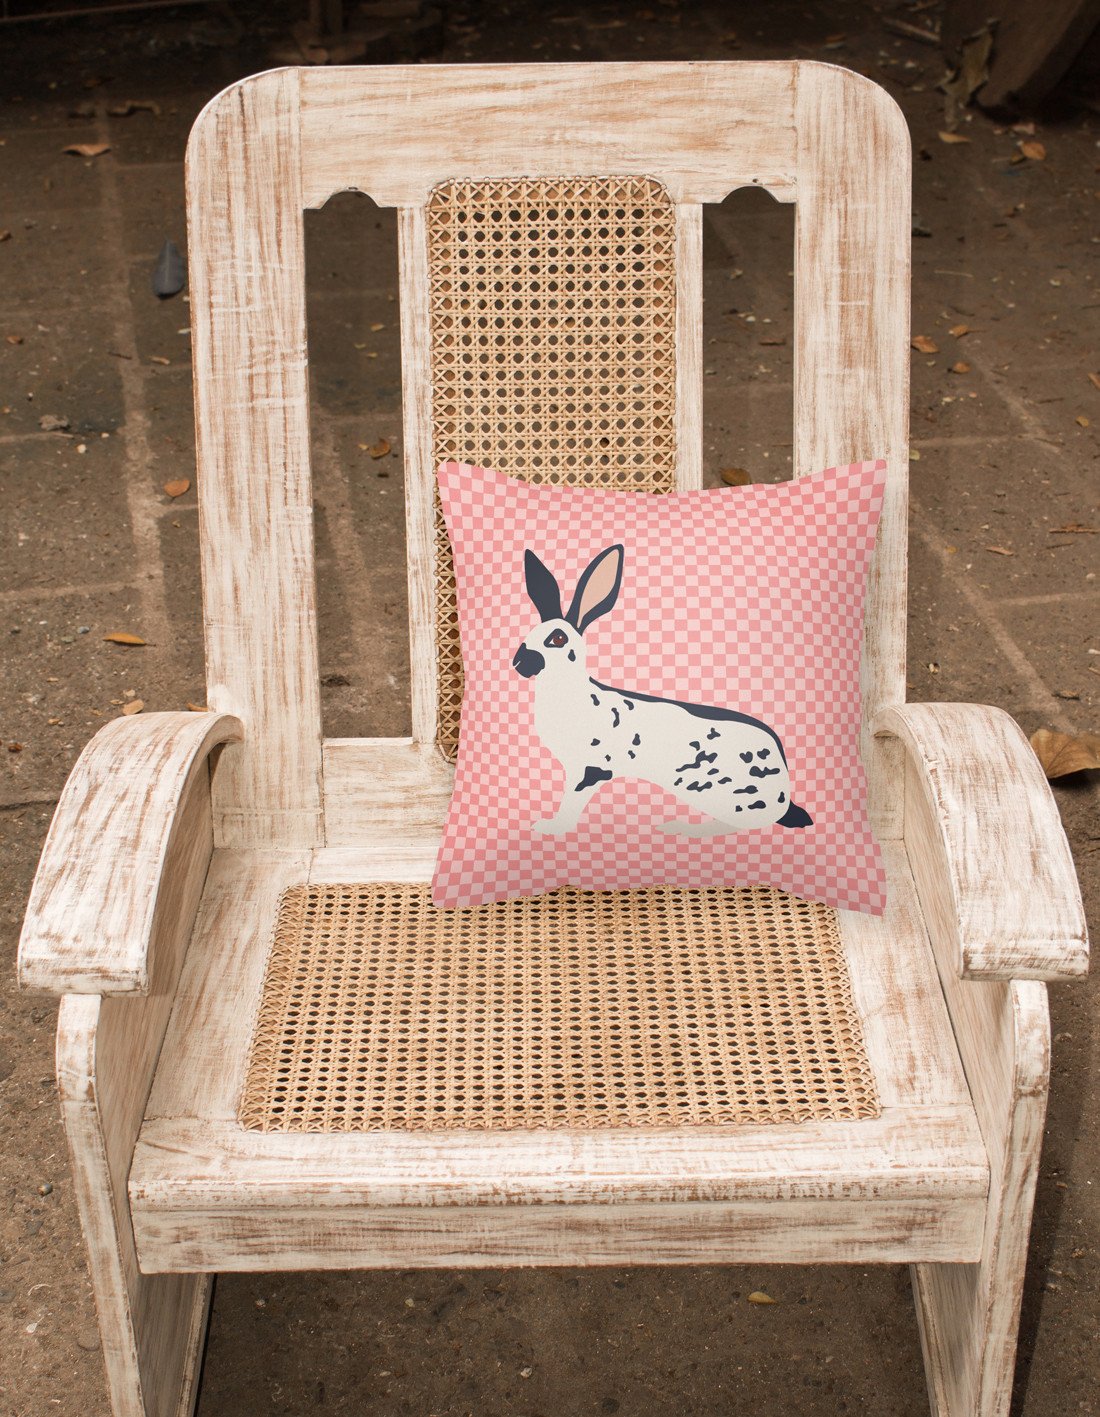 English Spot Rabbit Pink Check Fabric Decorative Pillow BB7961PW1818 by Caroline's Treasures